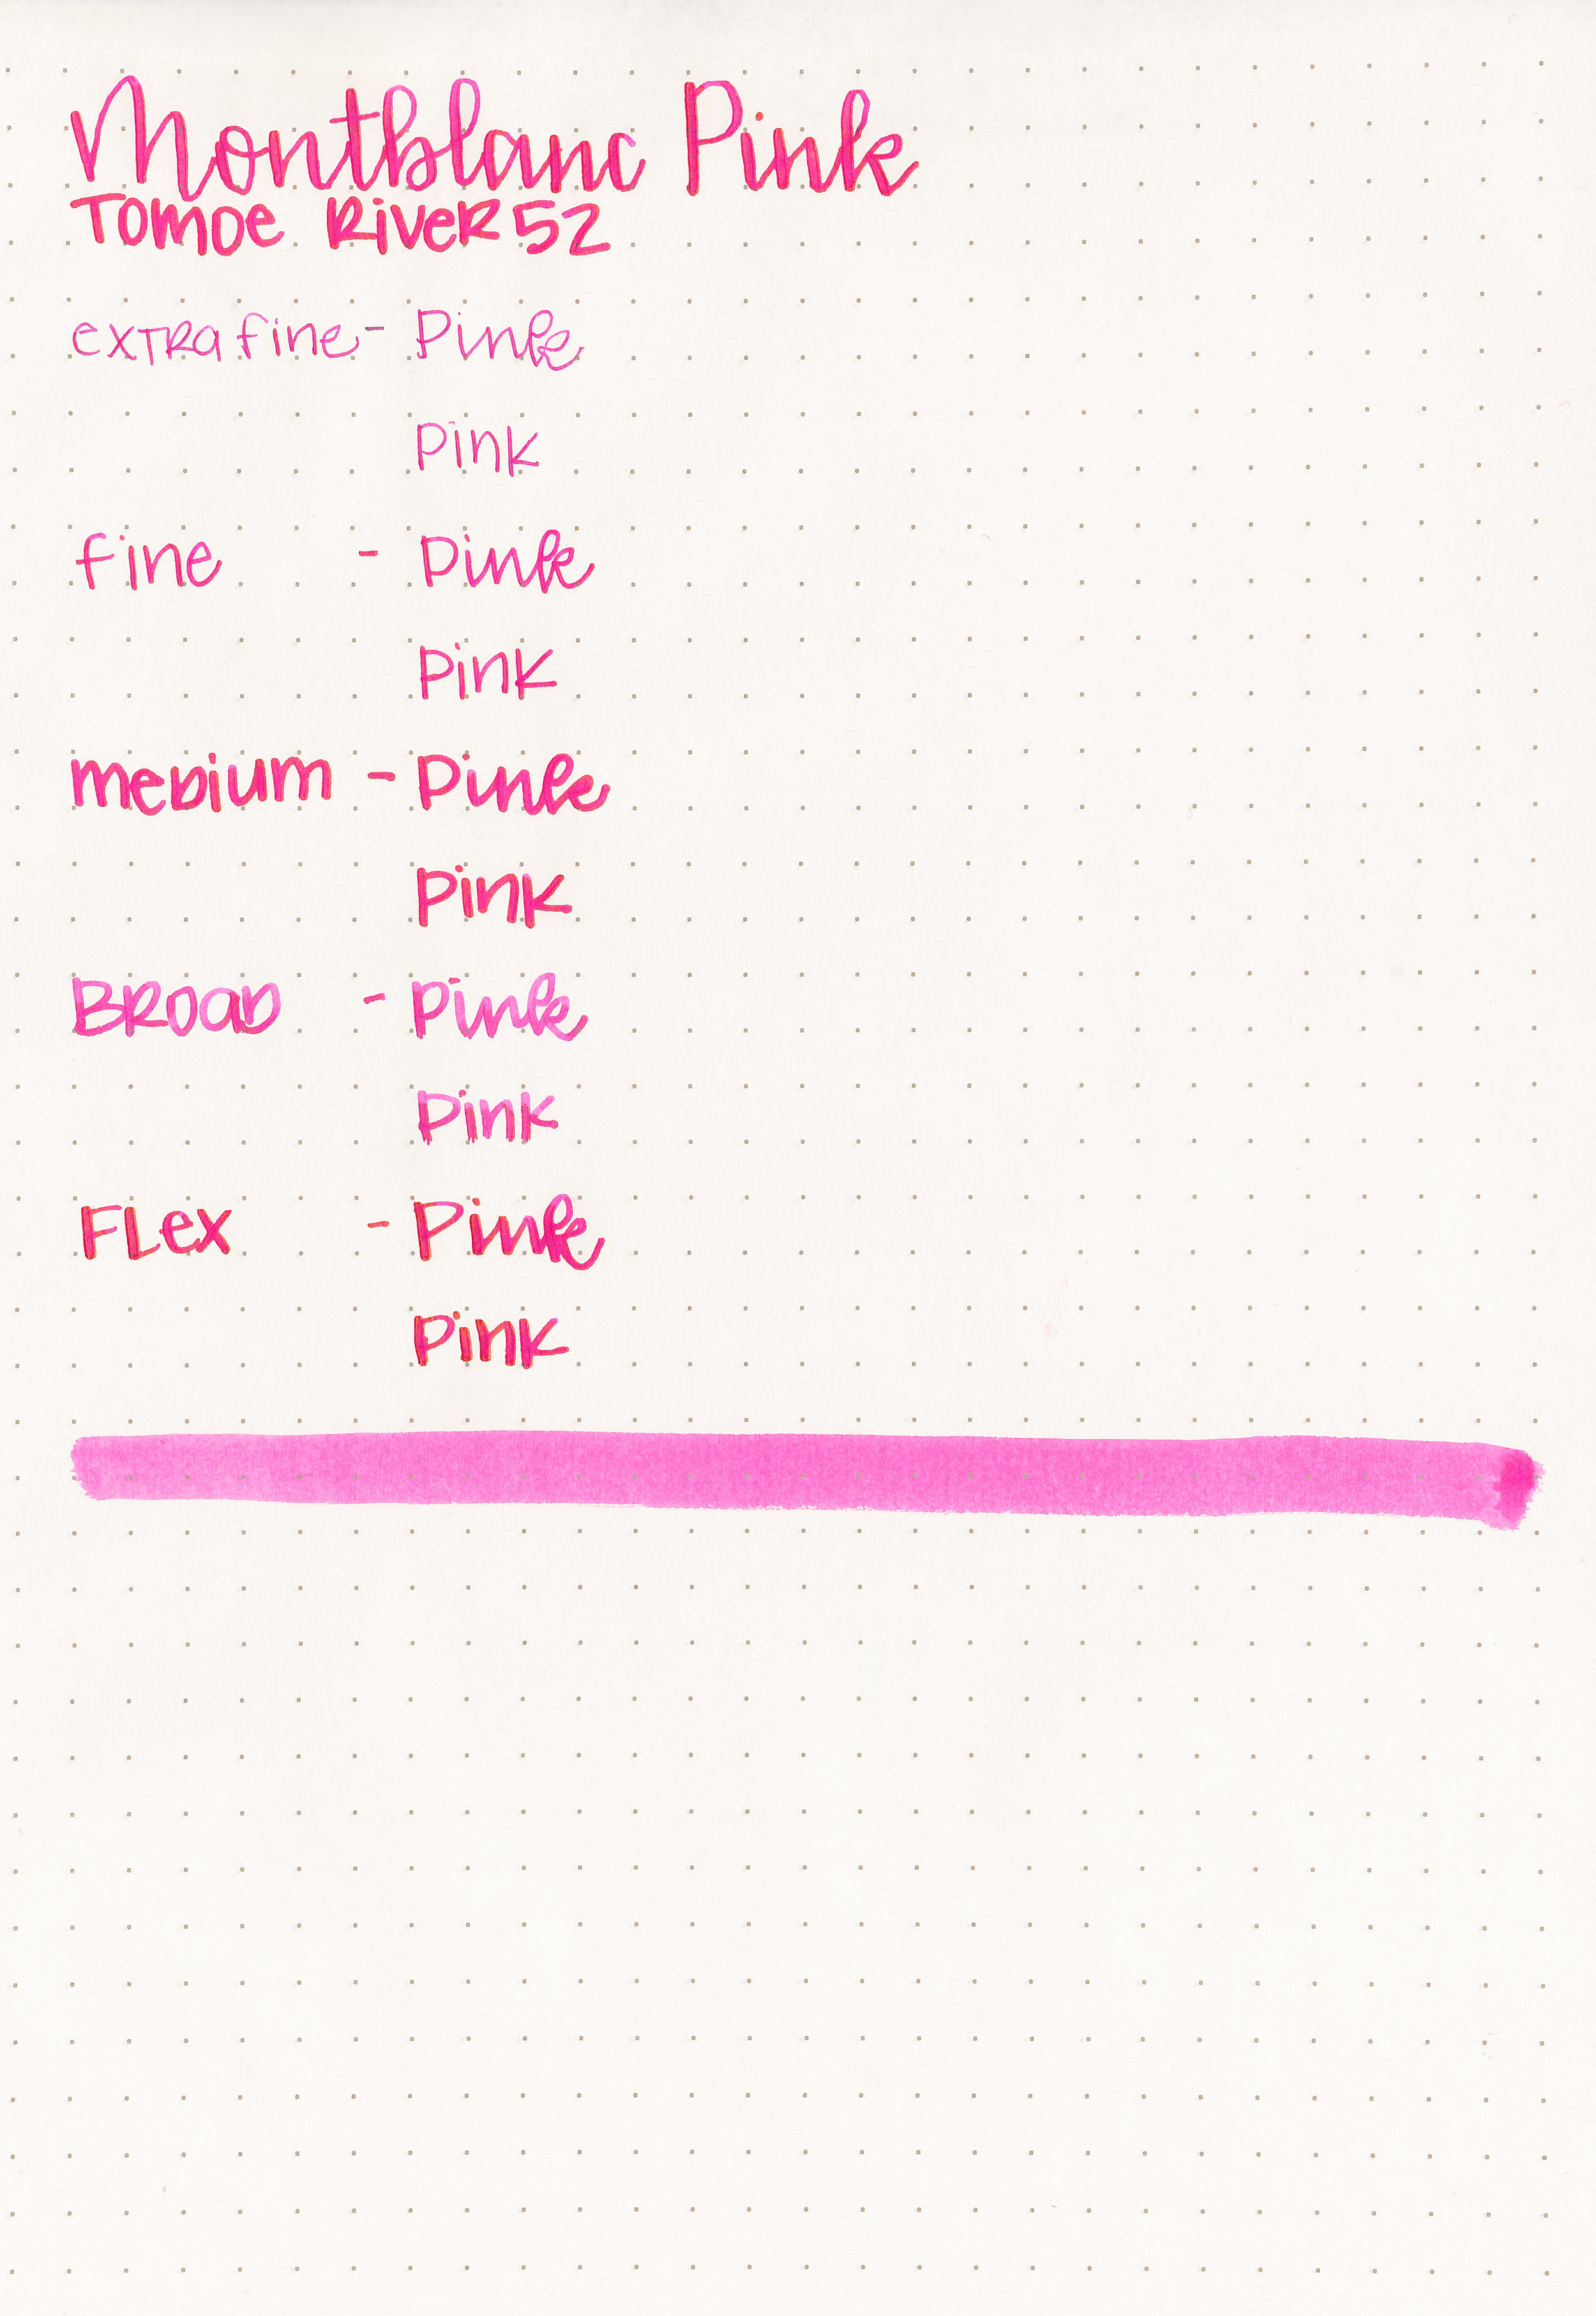 mb-pink-5.jpg